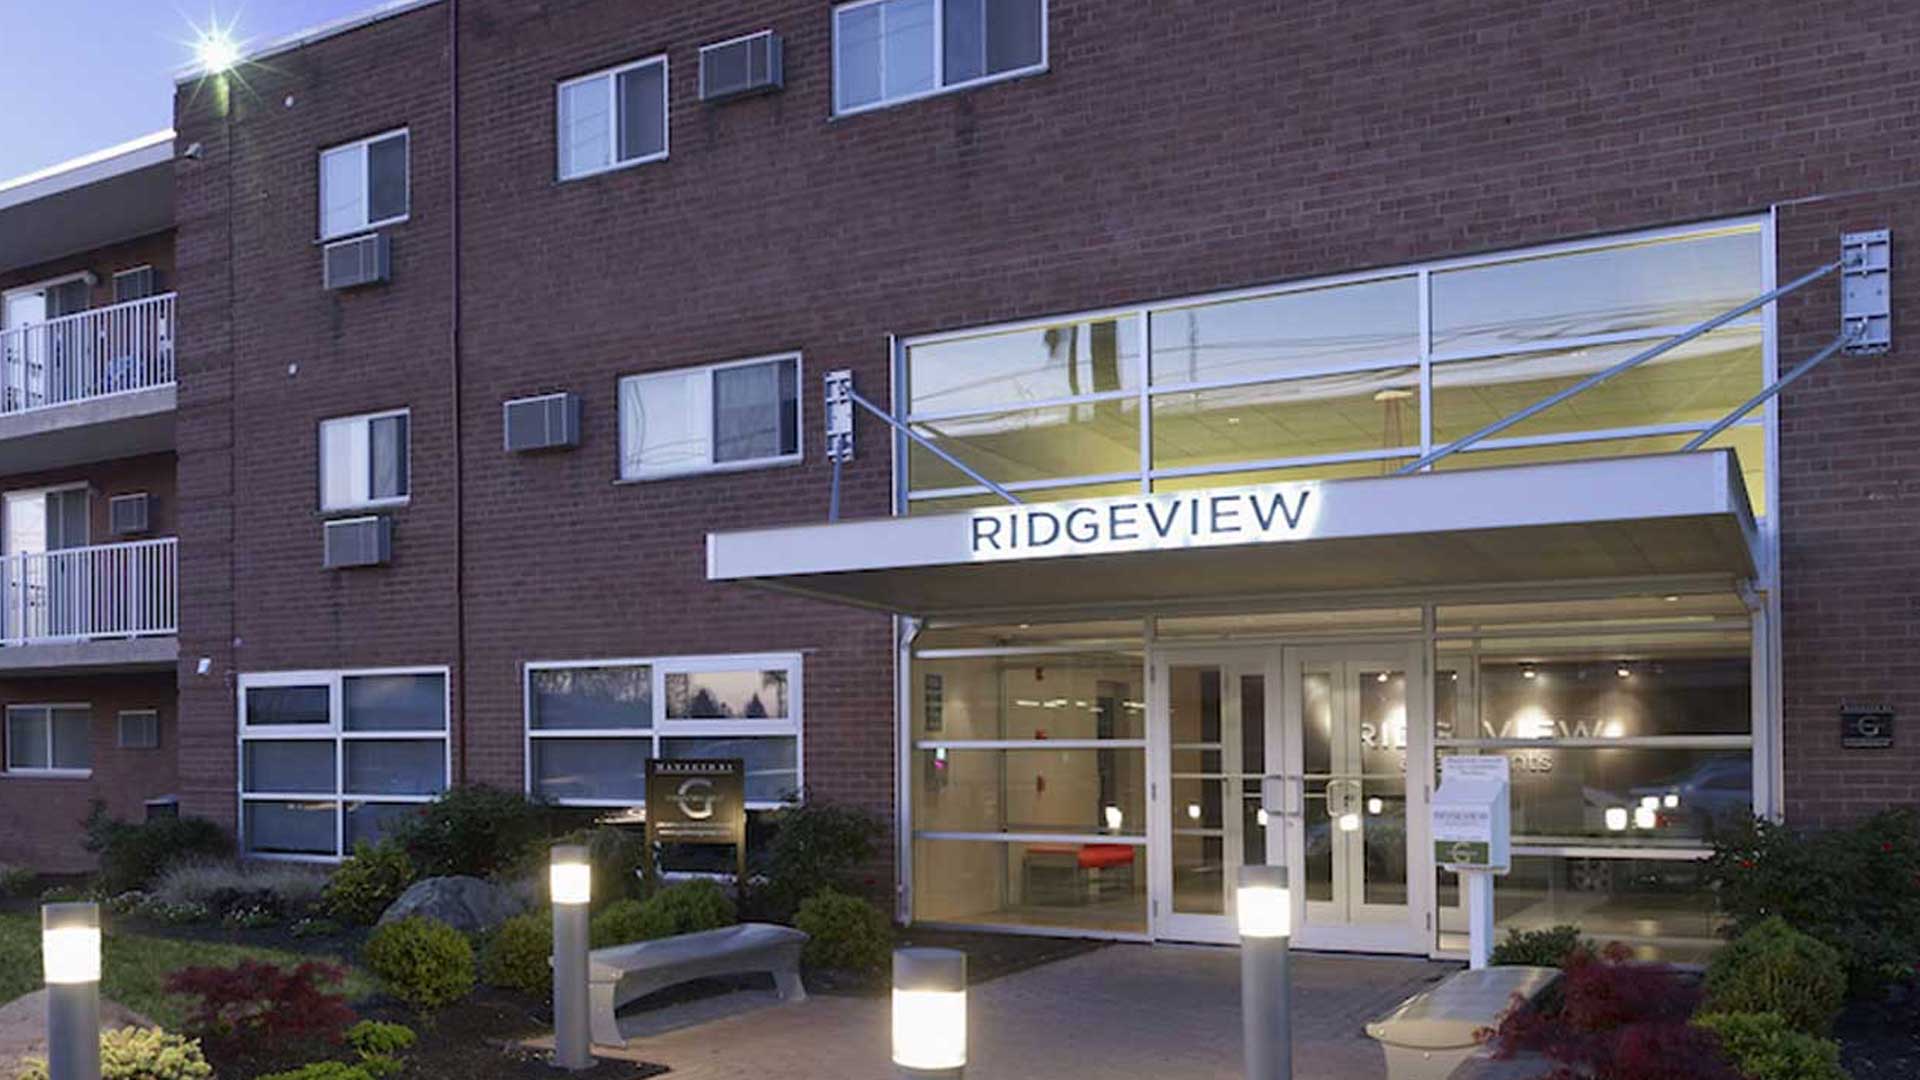 Ridgeview apartments building exterior